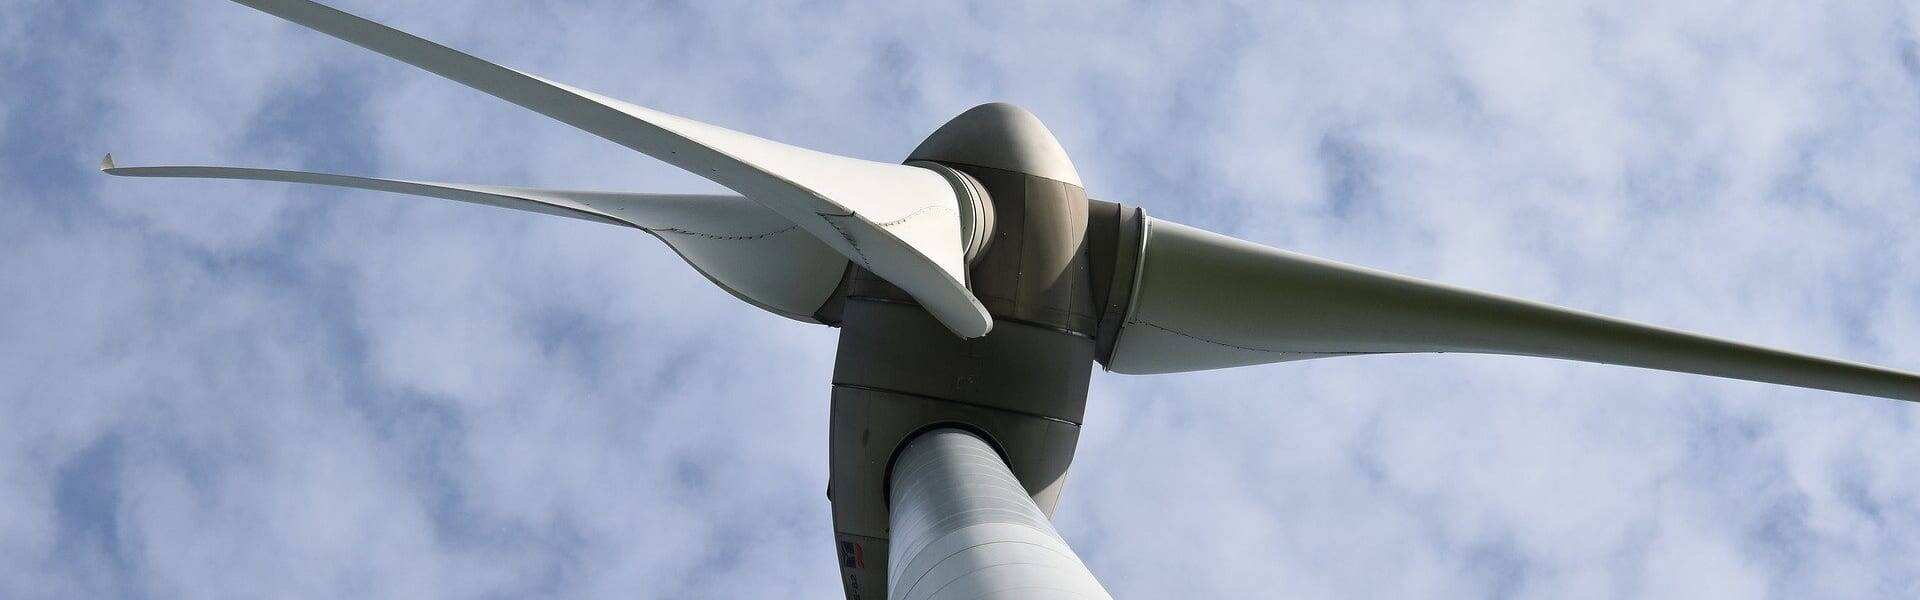 Wind power generation closes gap on gas